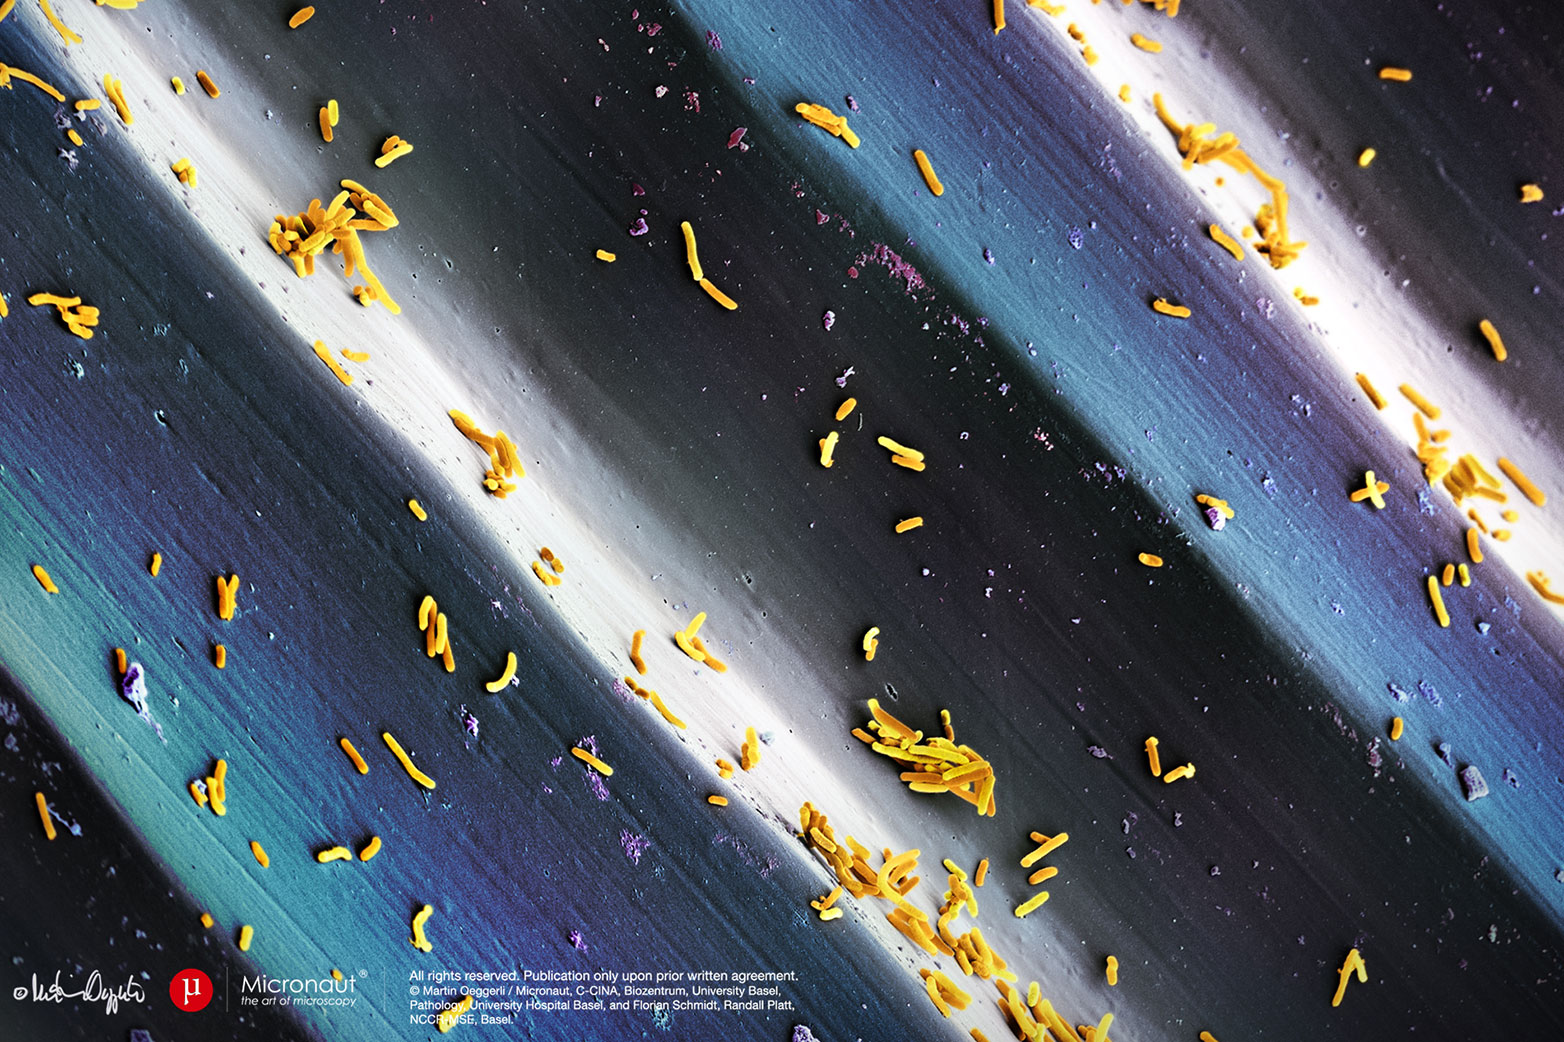 Enlarged view: E.coli-Bakterien auf Vinyl-Schallplatt